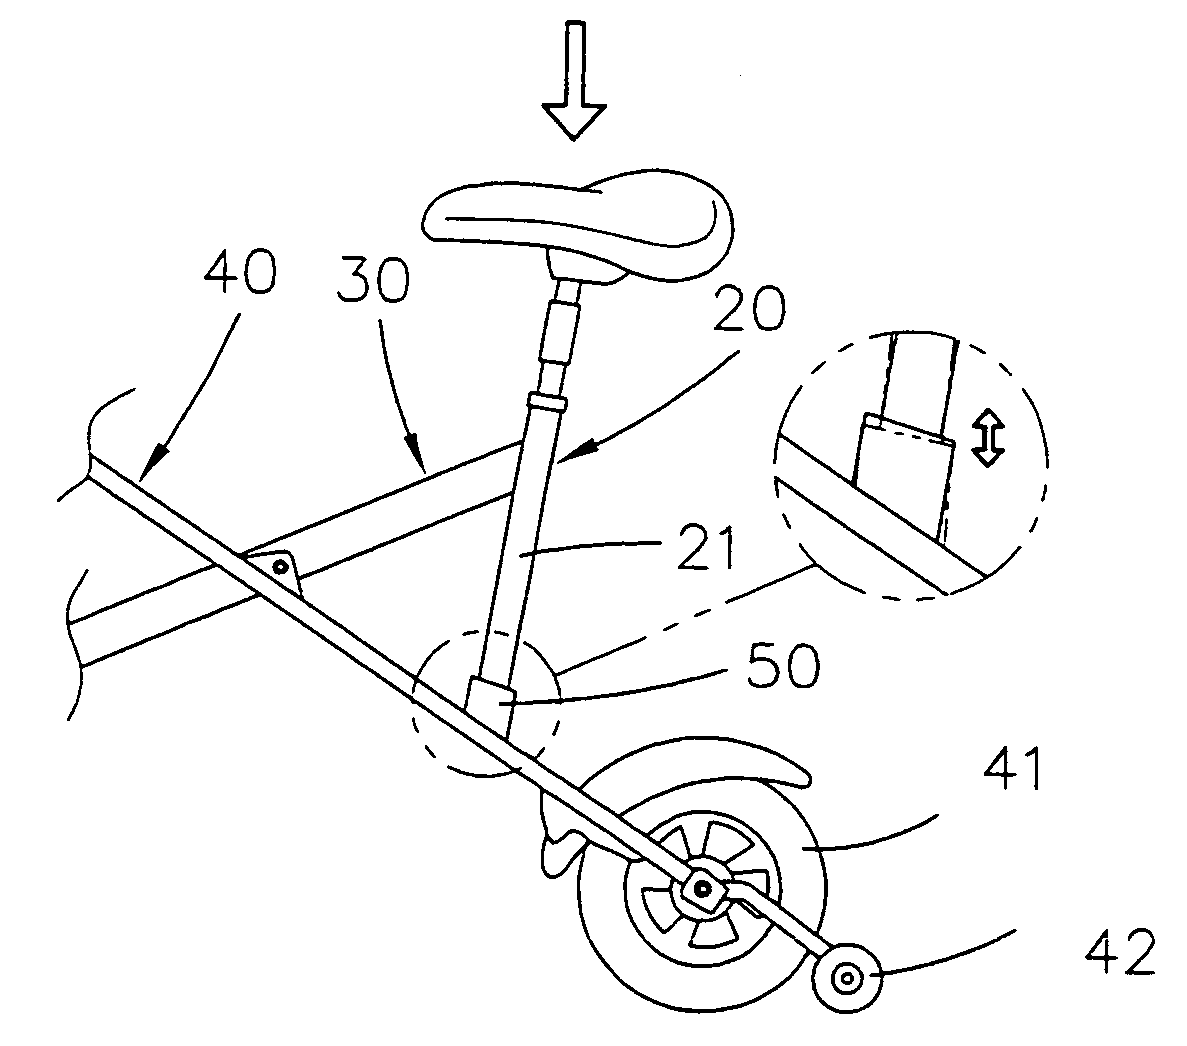 Folding bicycle